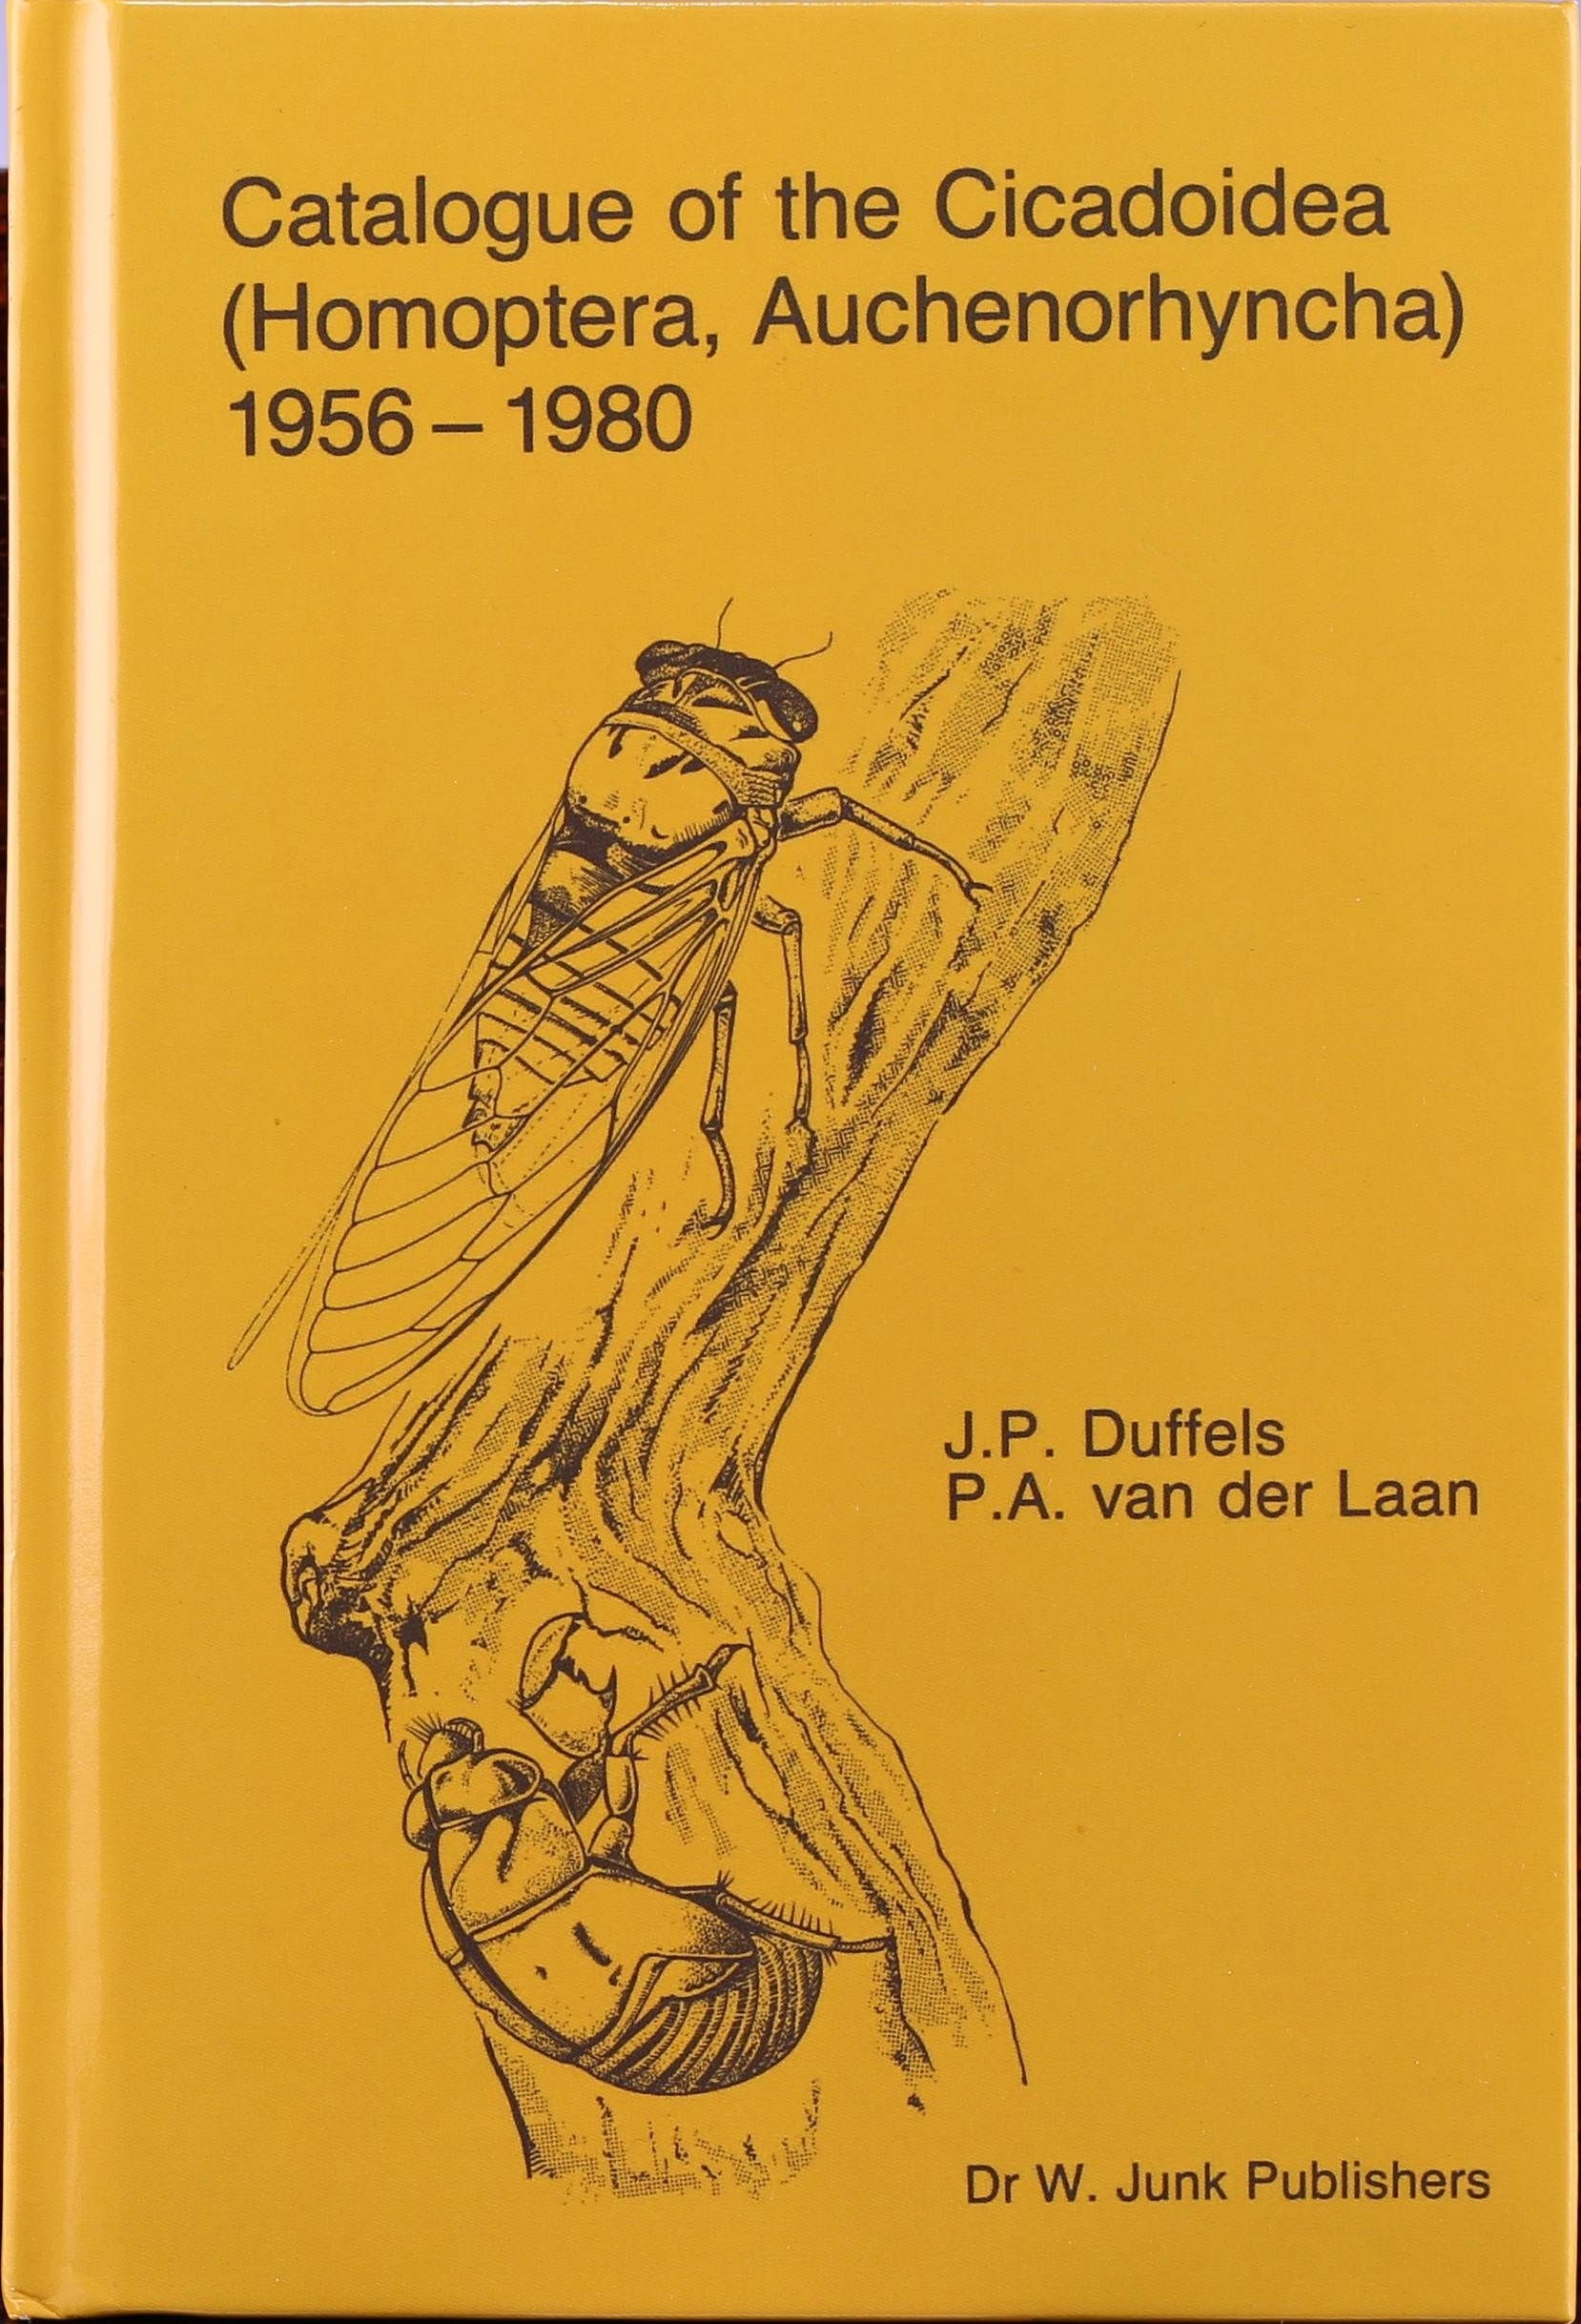 J.P. Duffels; P.A. van der Laan: Catalogue of the Cicadoidea (Homptera, Auchenorhyncha) 1956-1980 (Rippl-Rónai Múzeum CC BY-NC-ND)